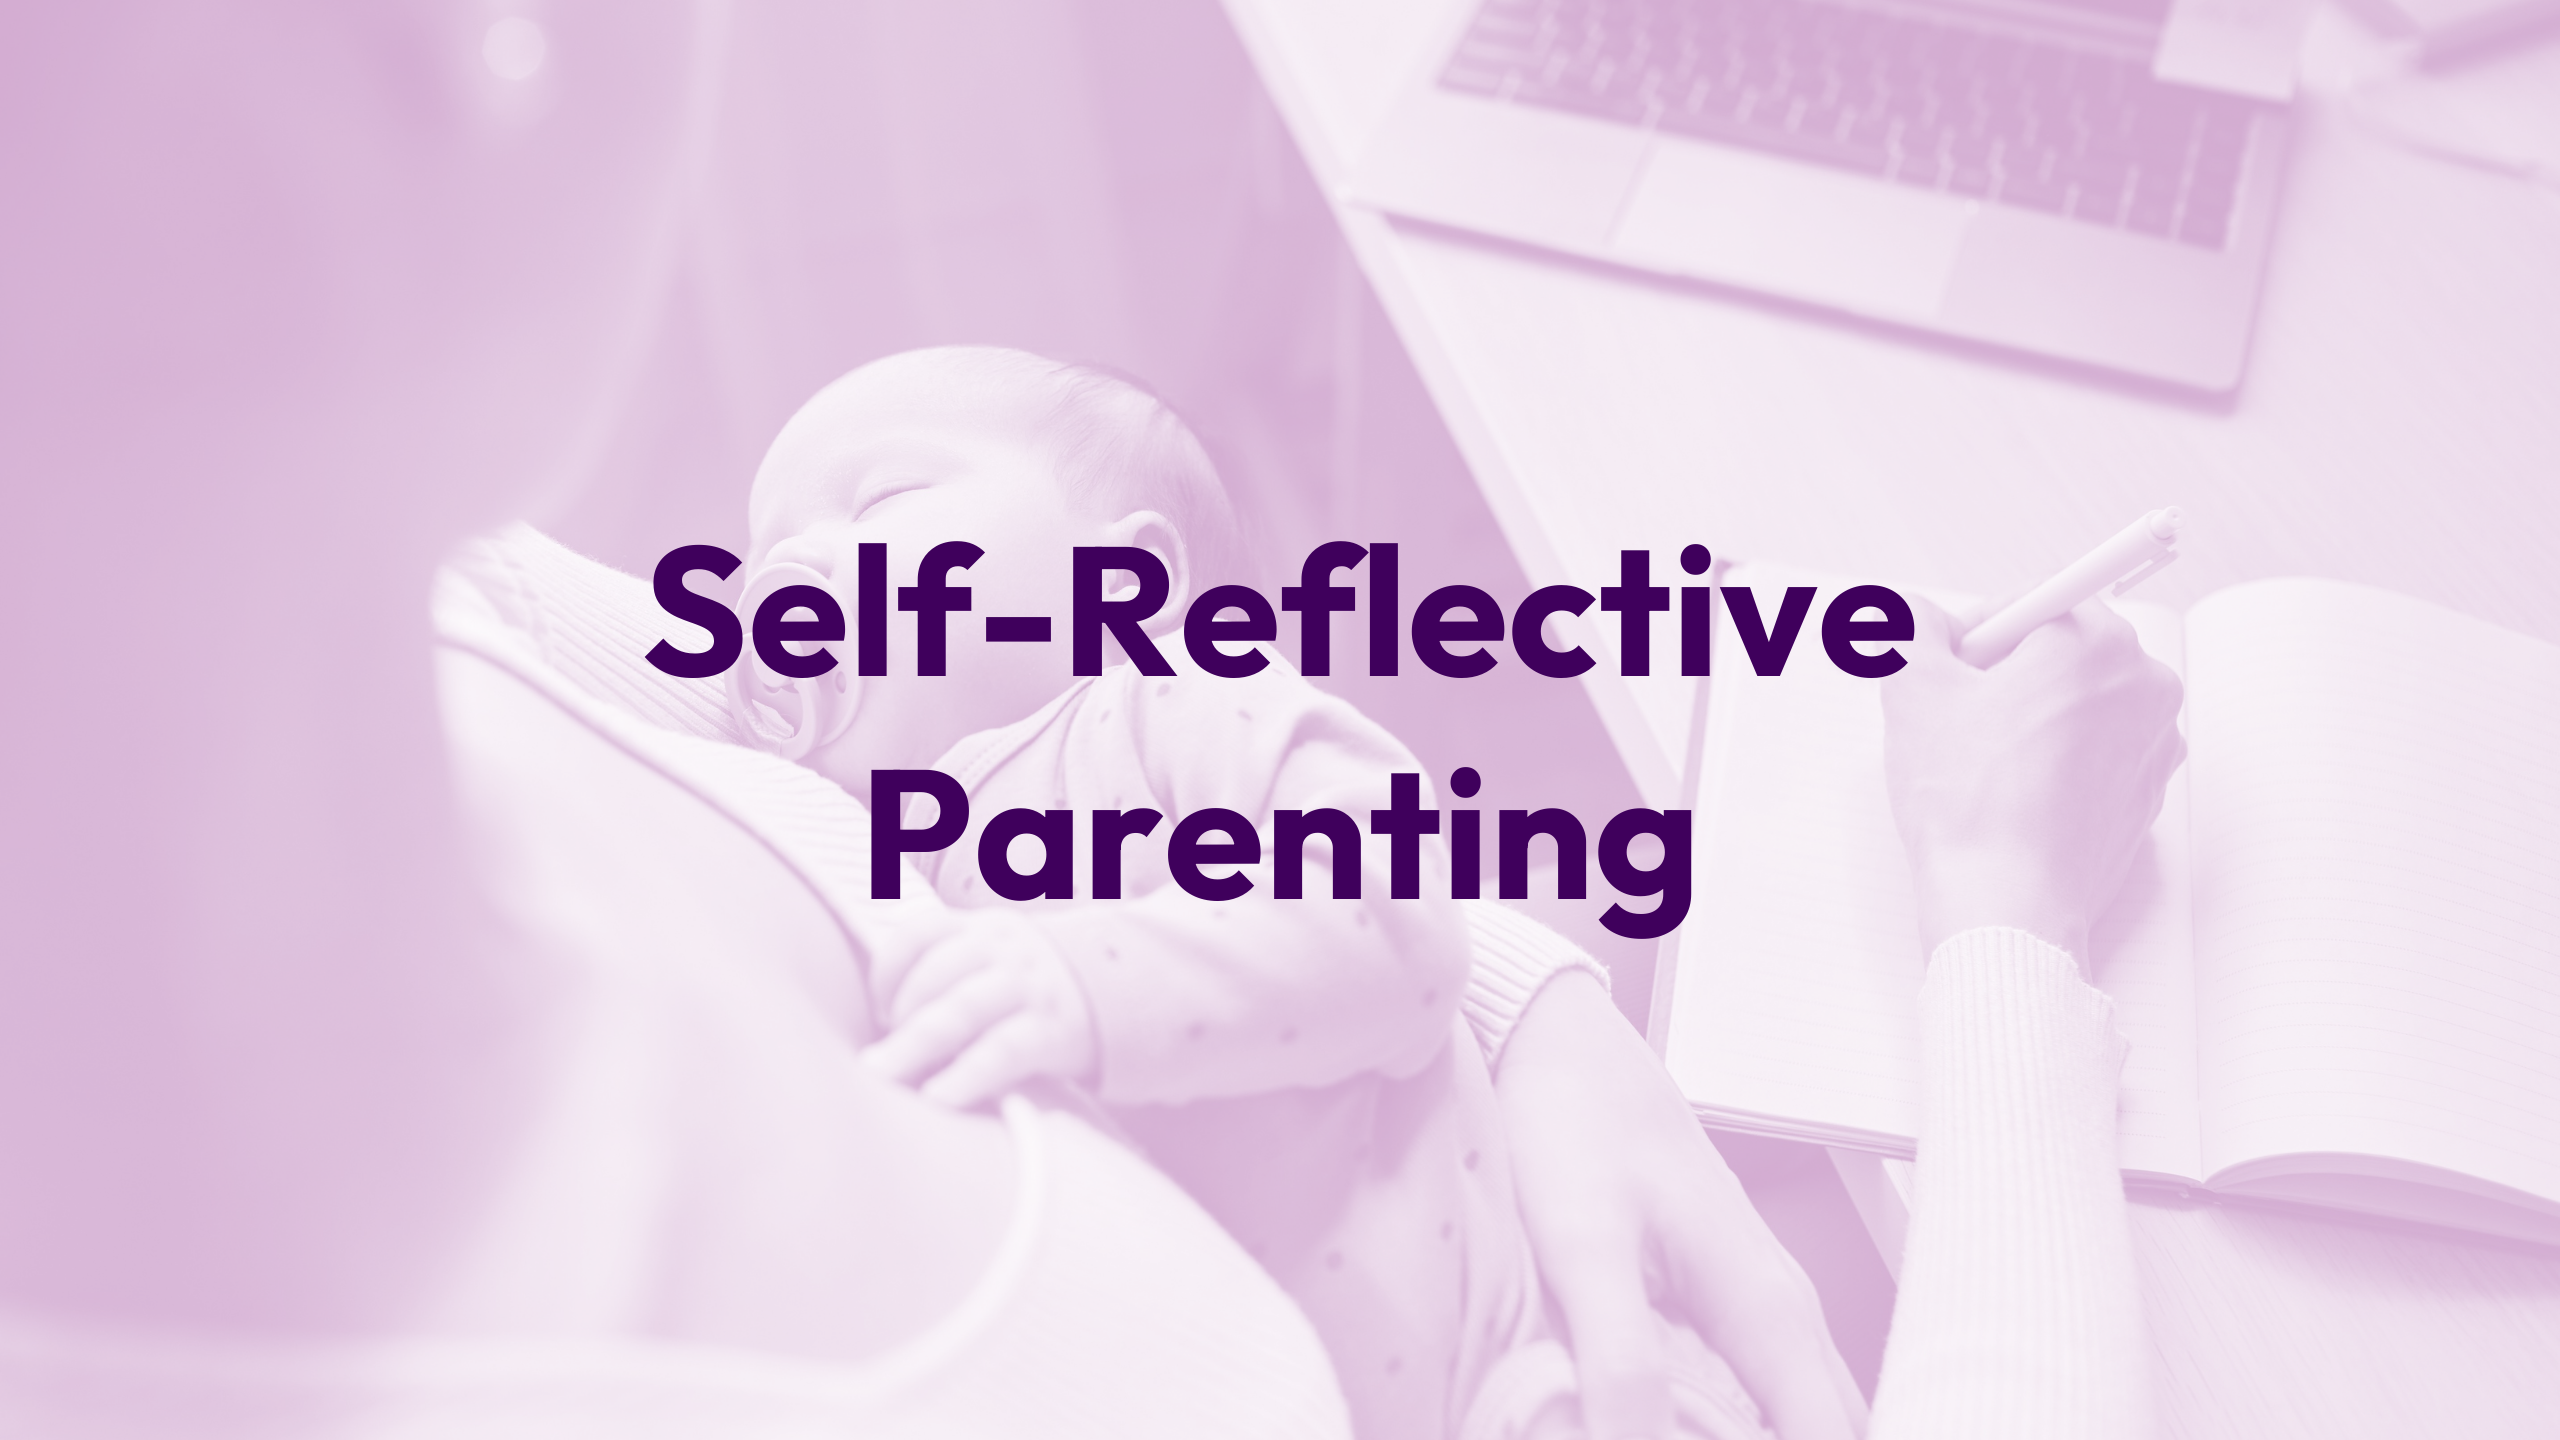 Self-Reflective Parenting